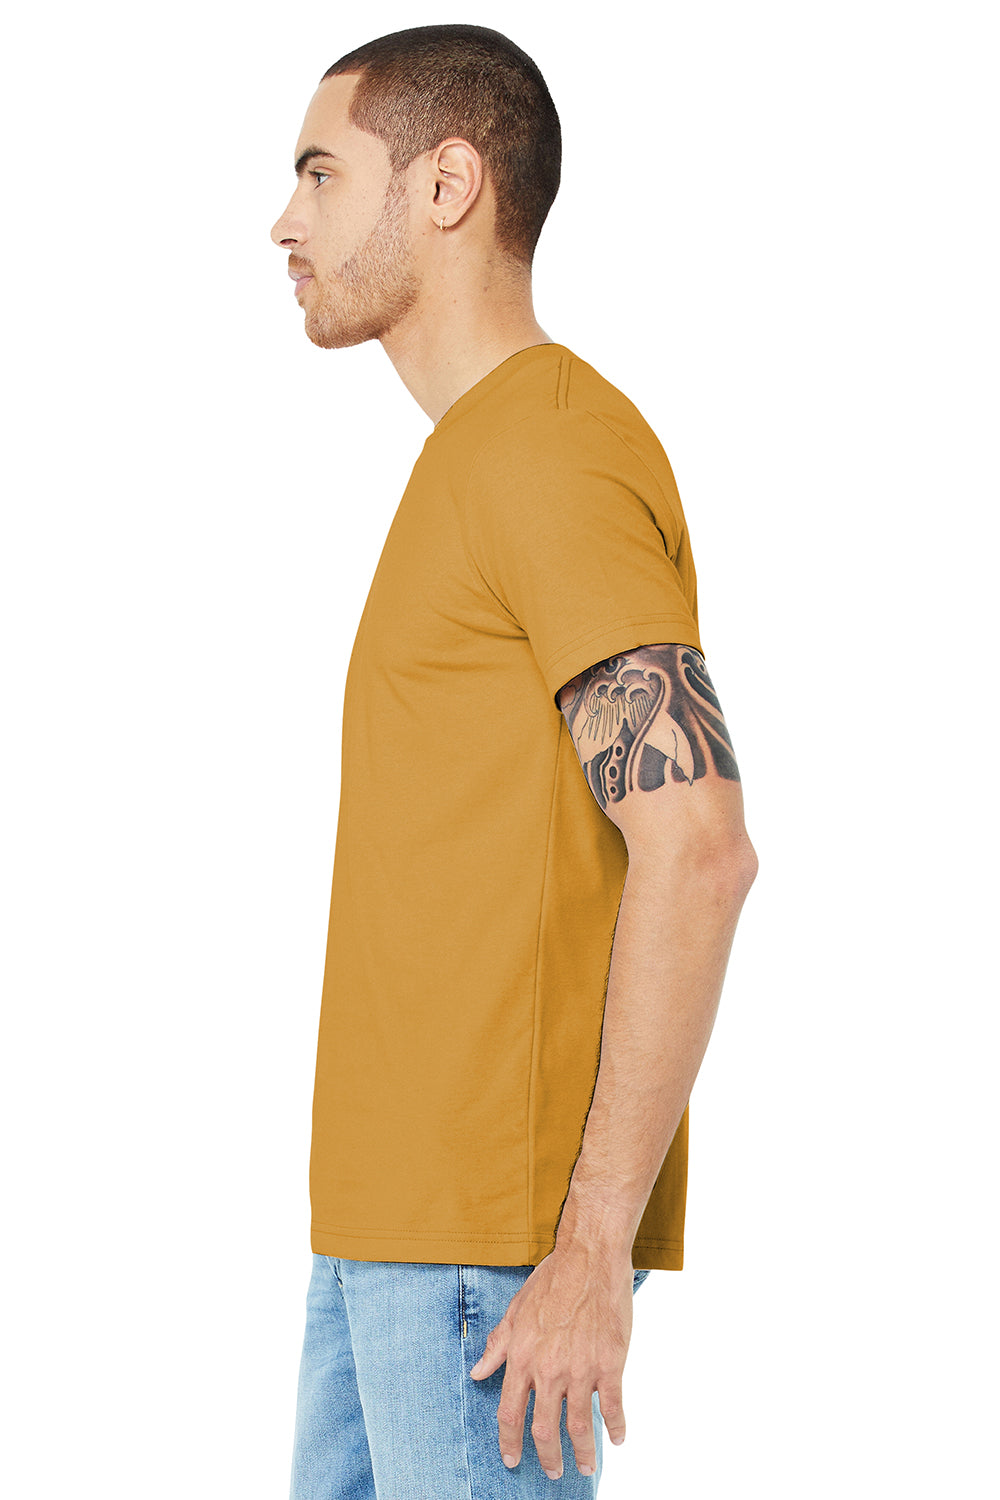 Bella + Canvas BC3001/3001C Mens Jersey Short Sleeve Crewneck T-Shirt Mustard Yellow Model Side